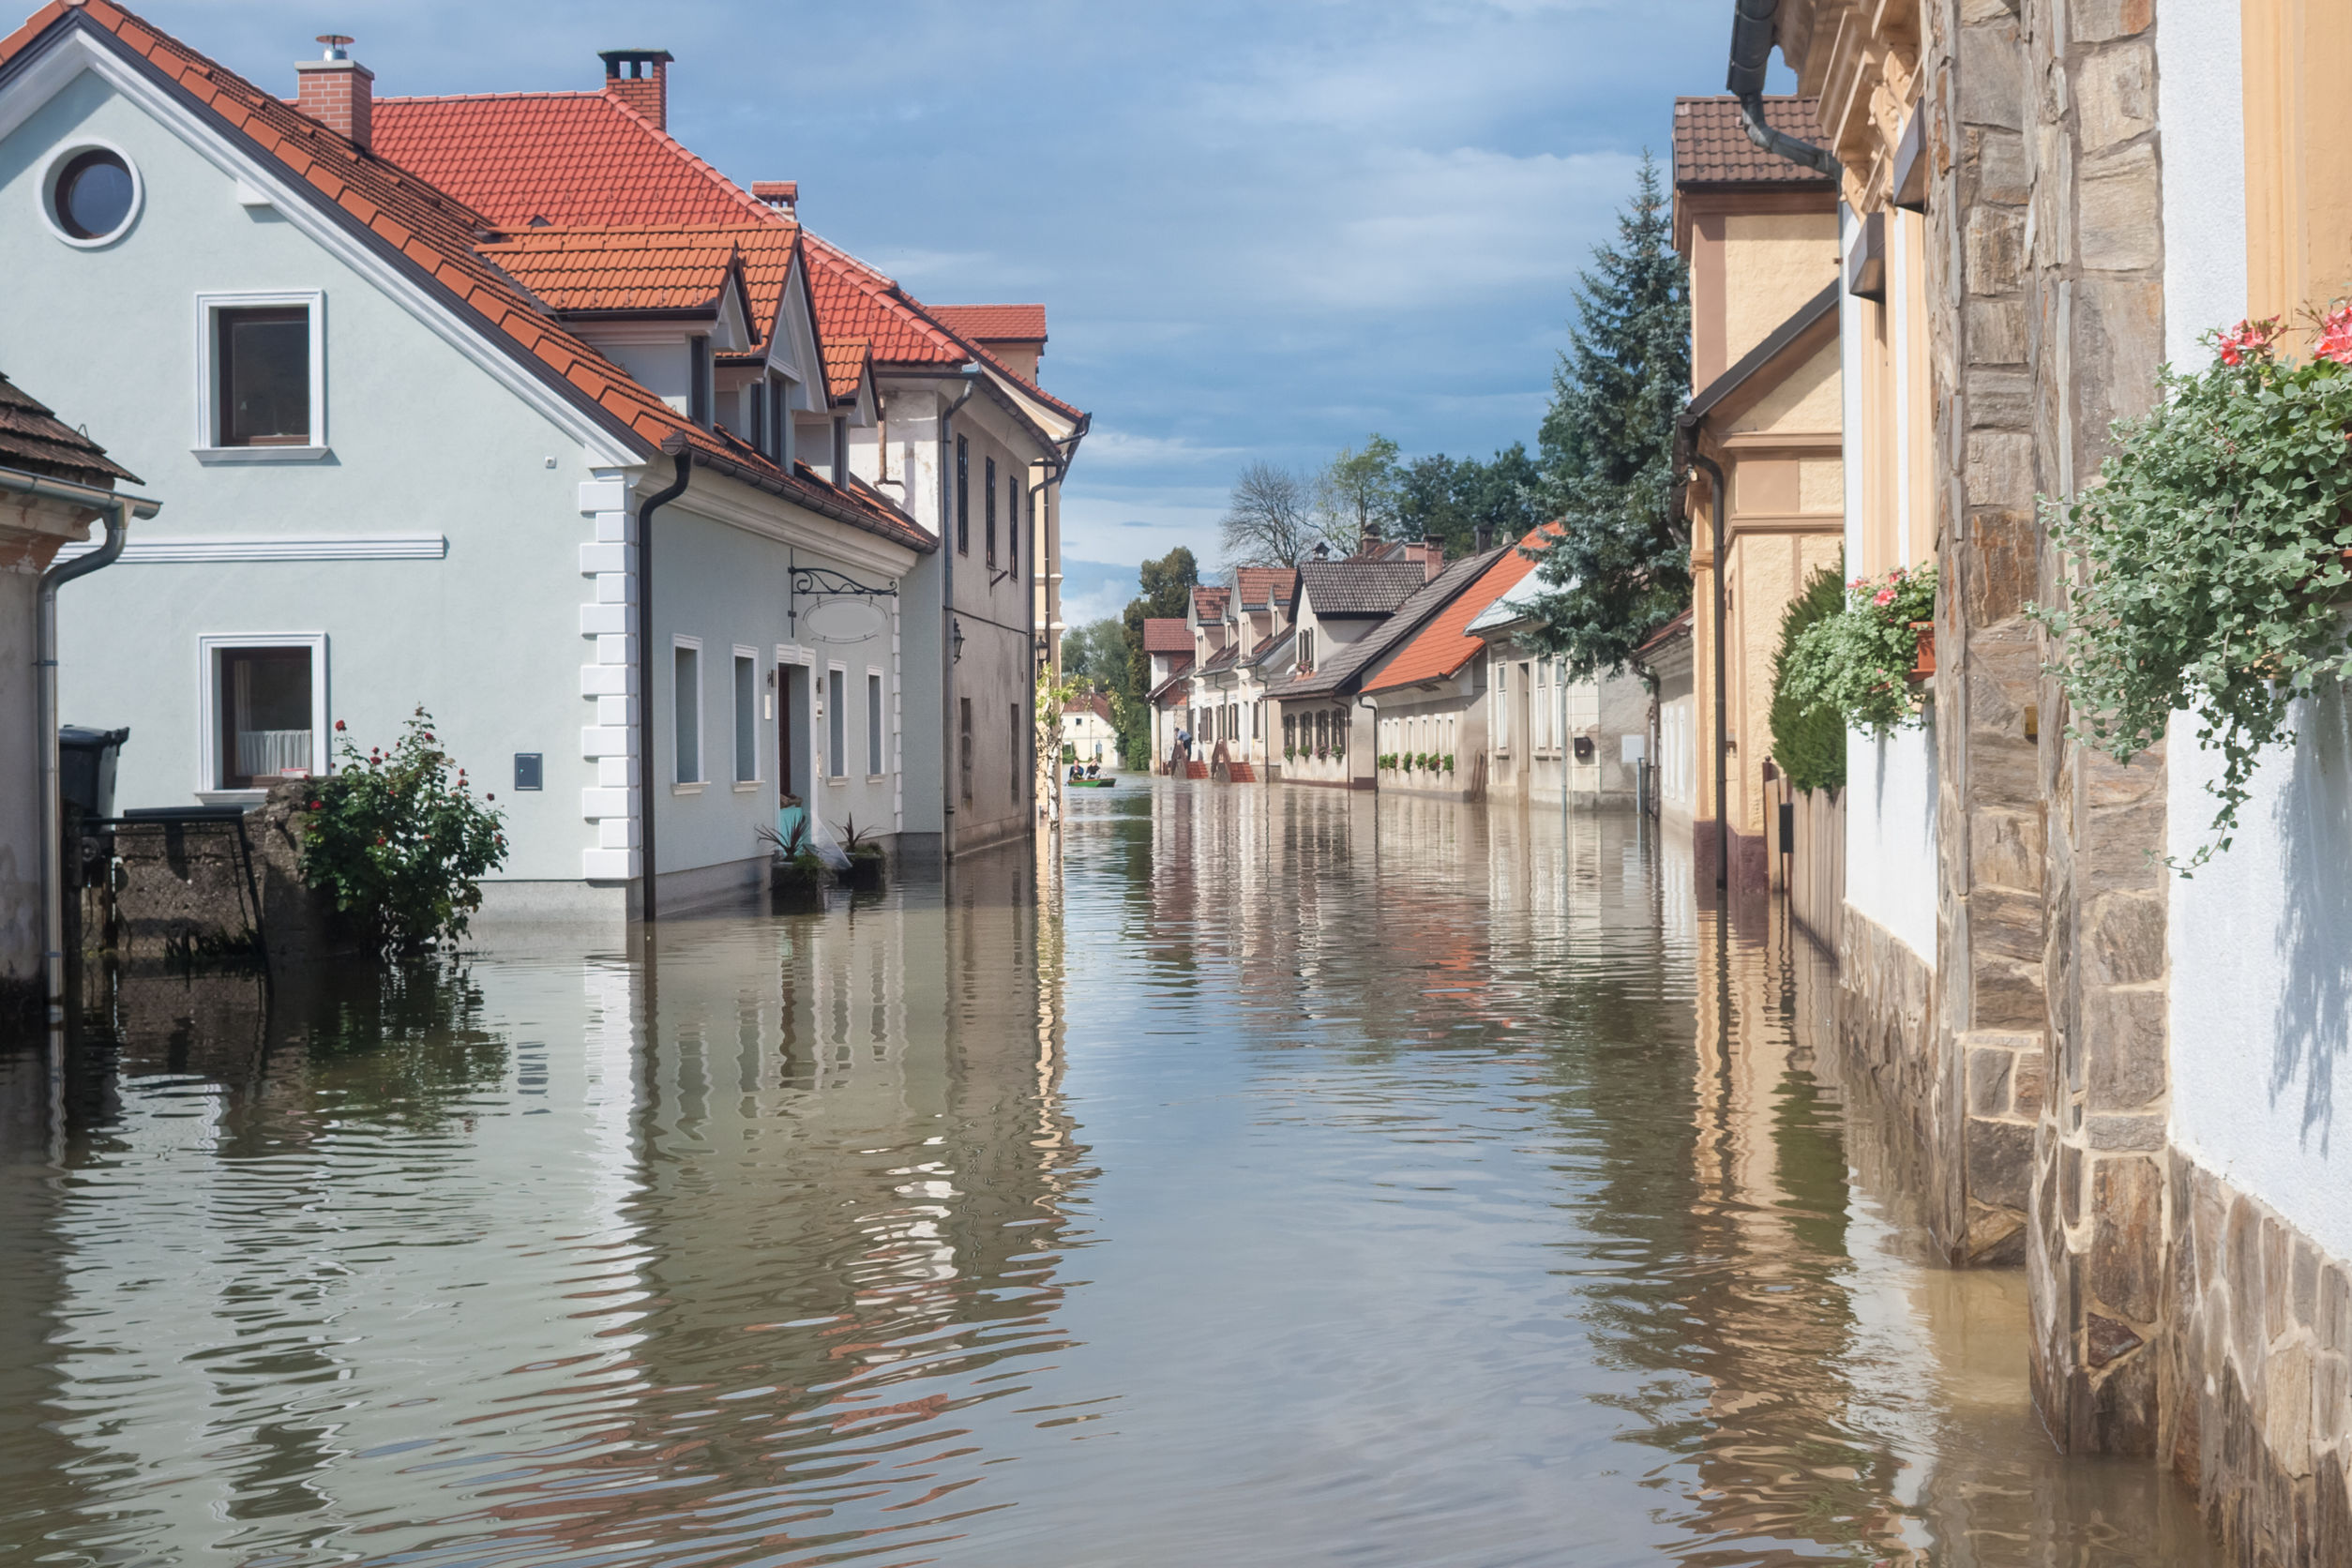 Restoring your business after a flood